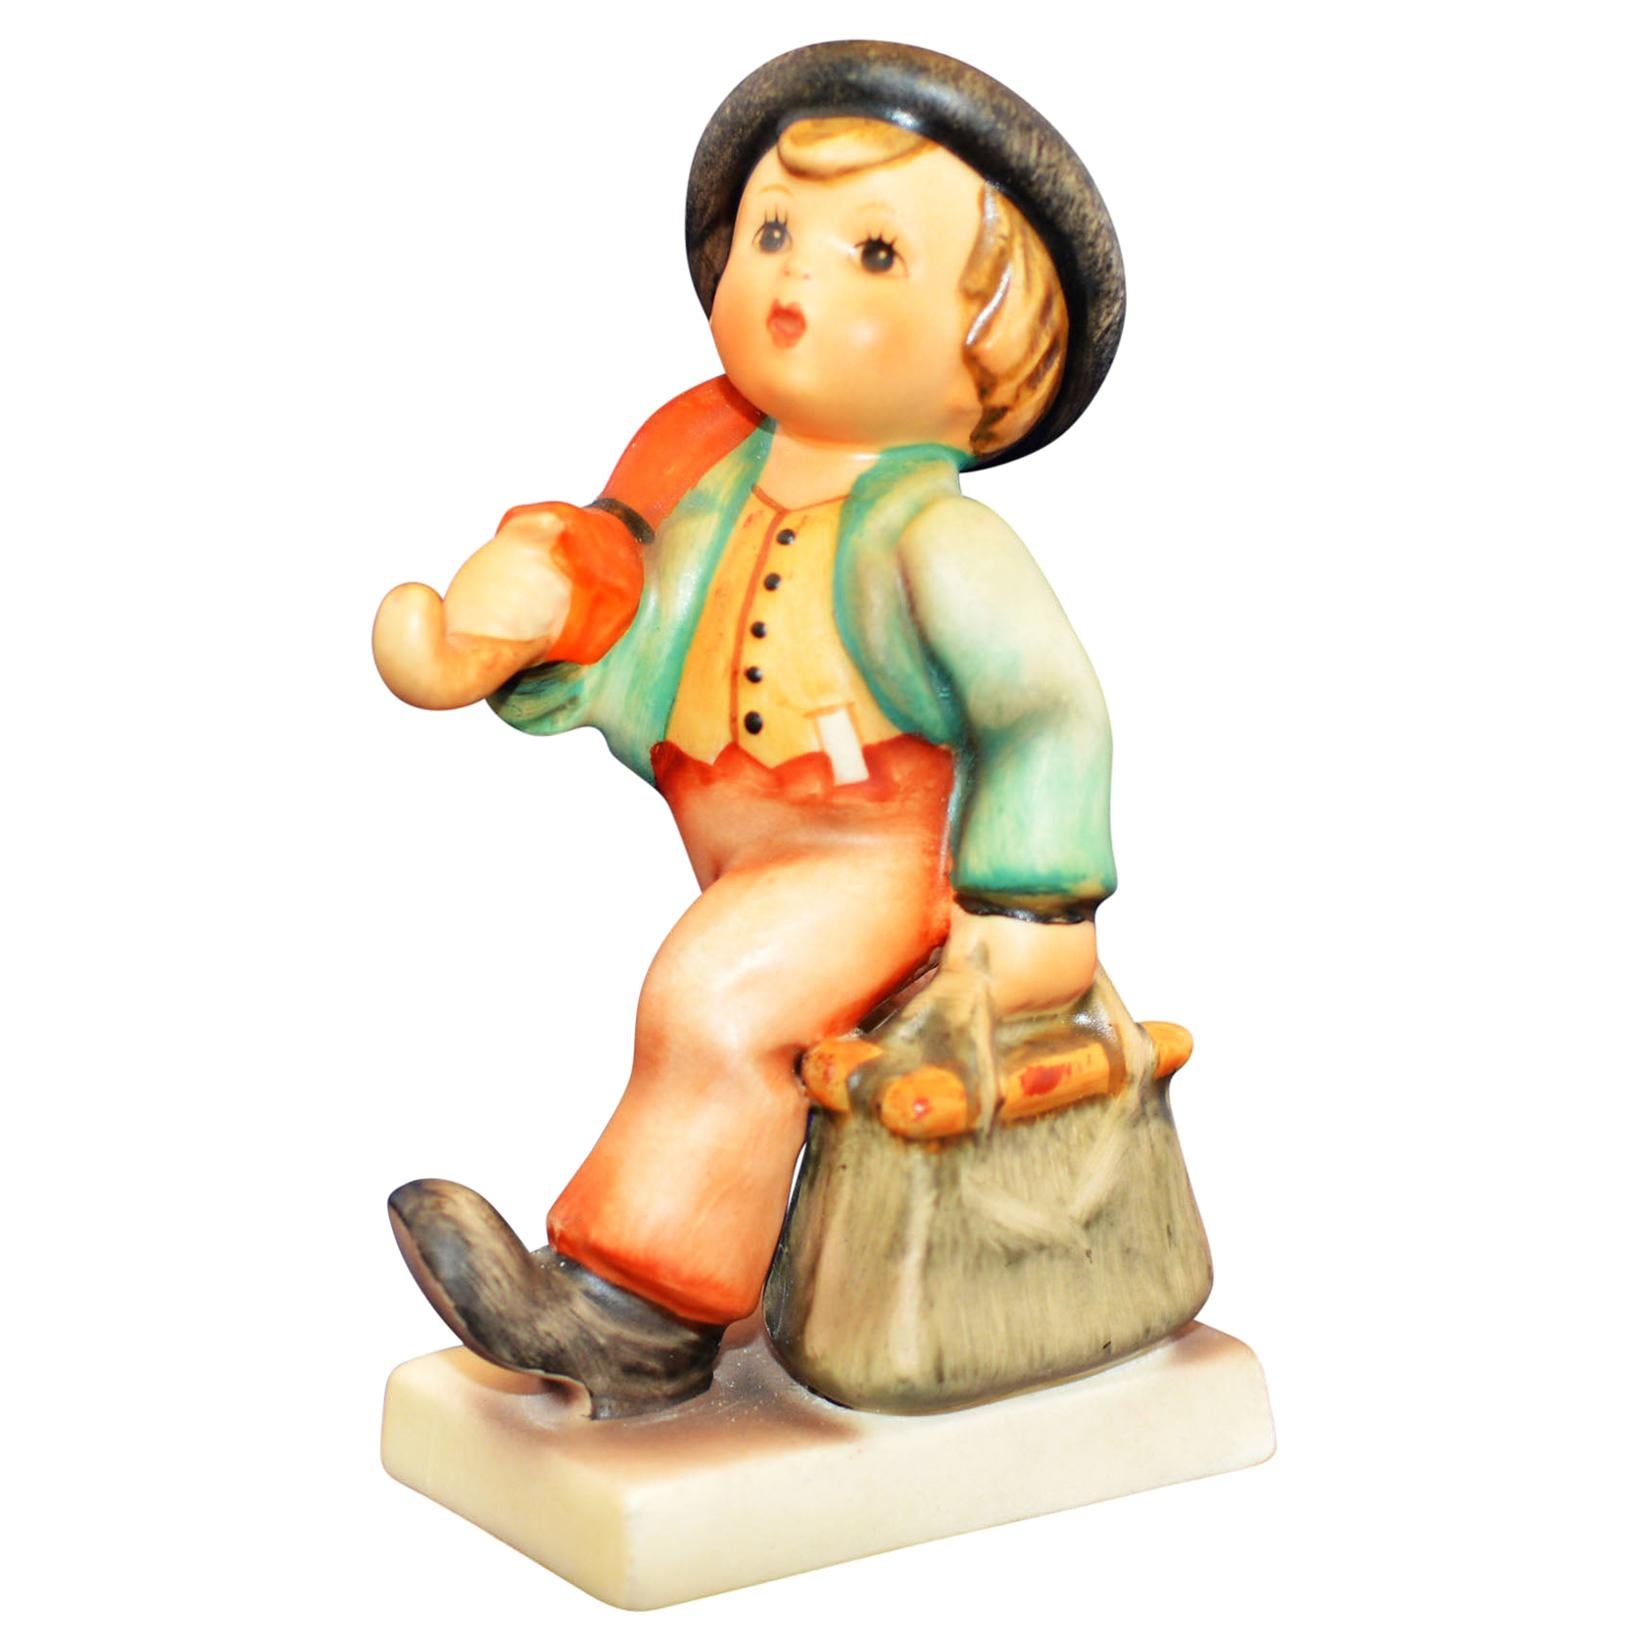 Hummel Figurines 6 For Sale on 1stDibs | vintage hummel german hummel figurines